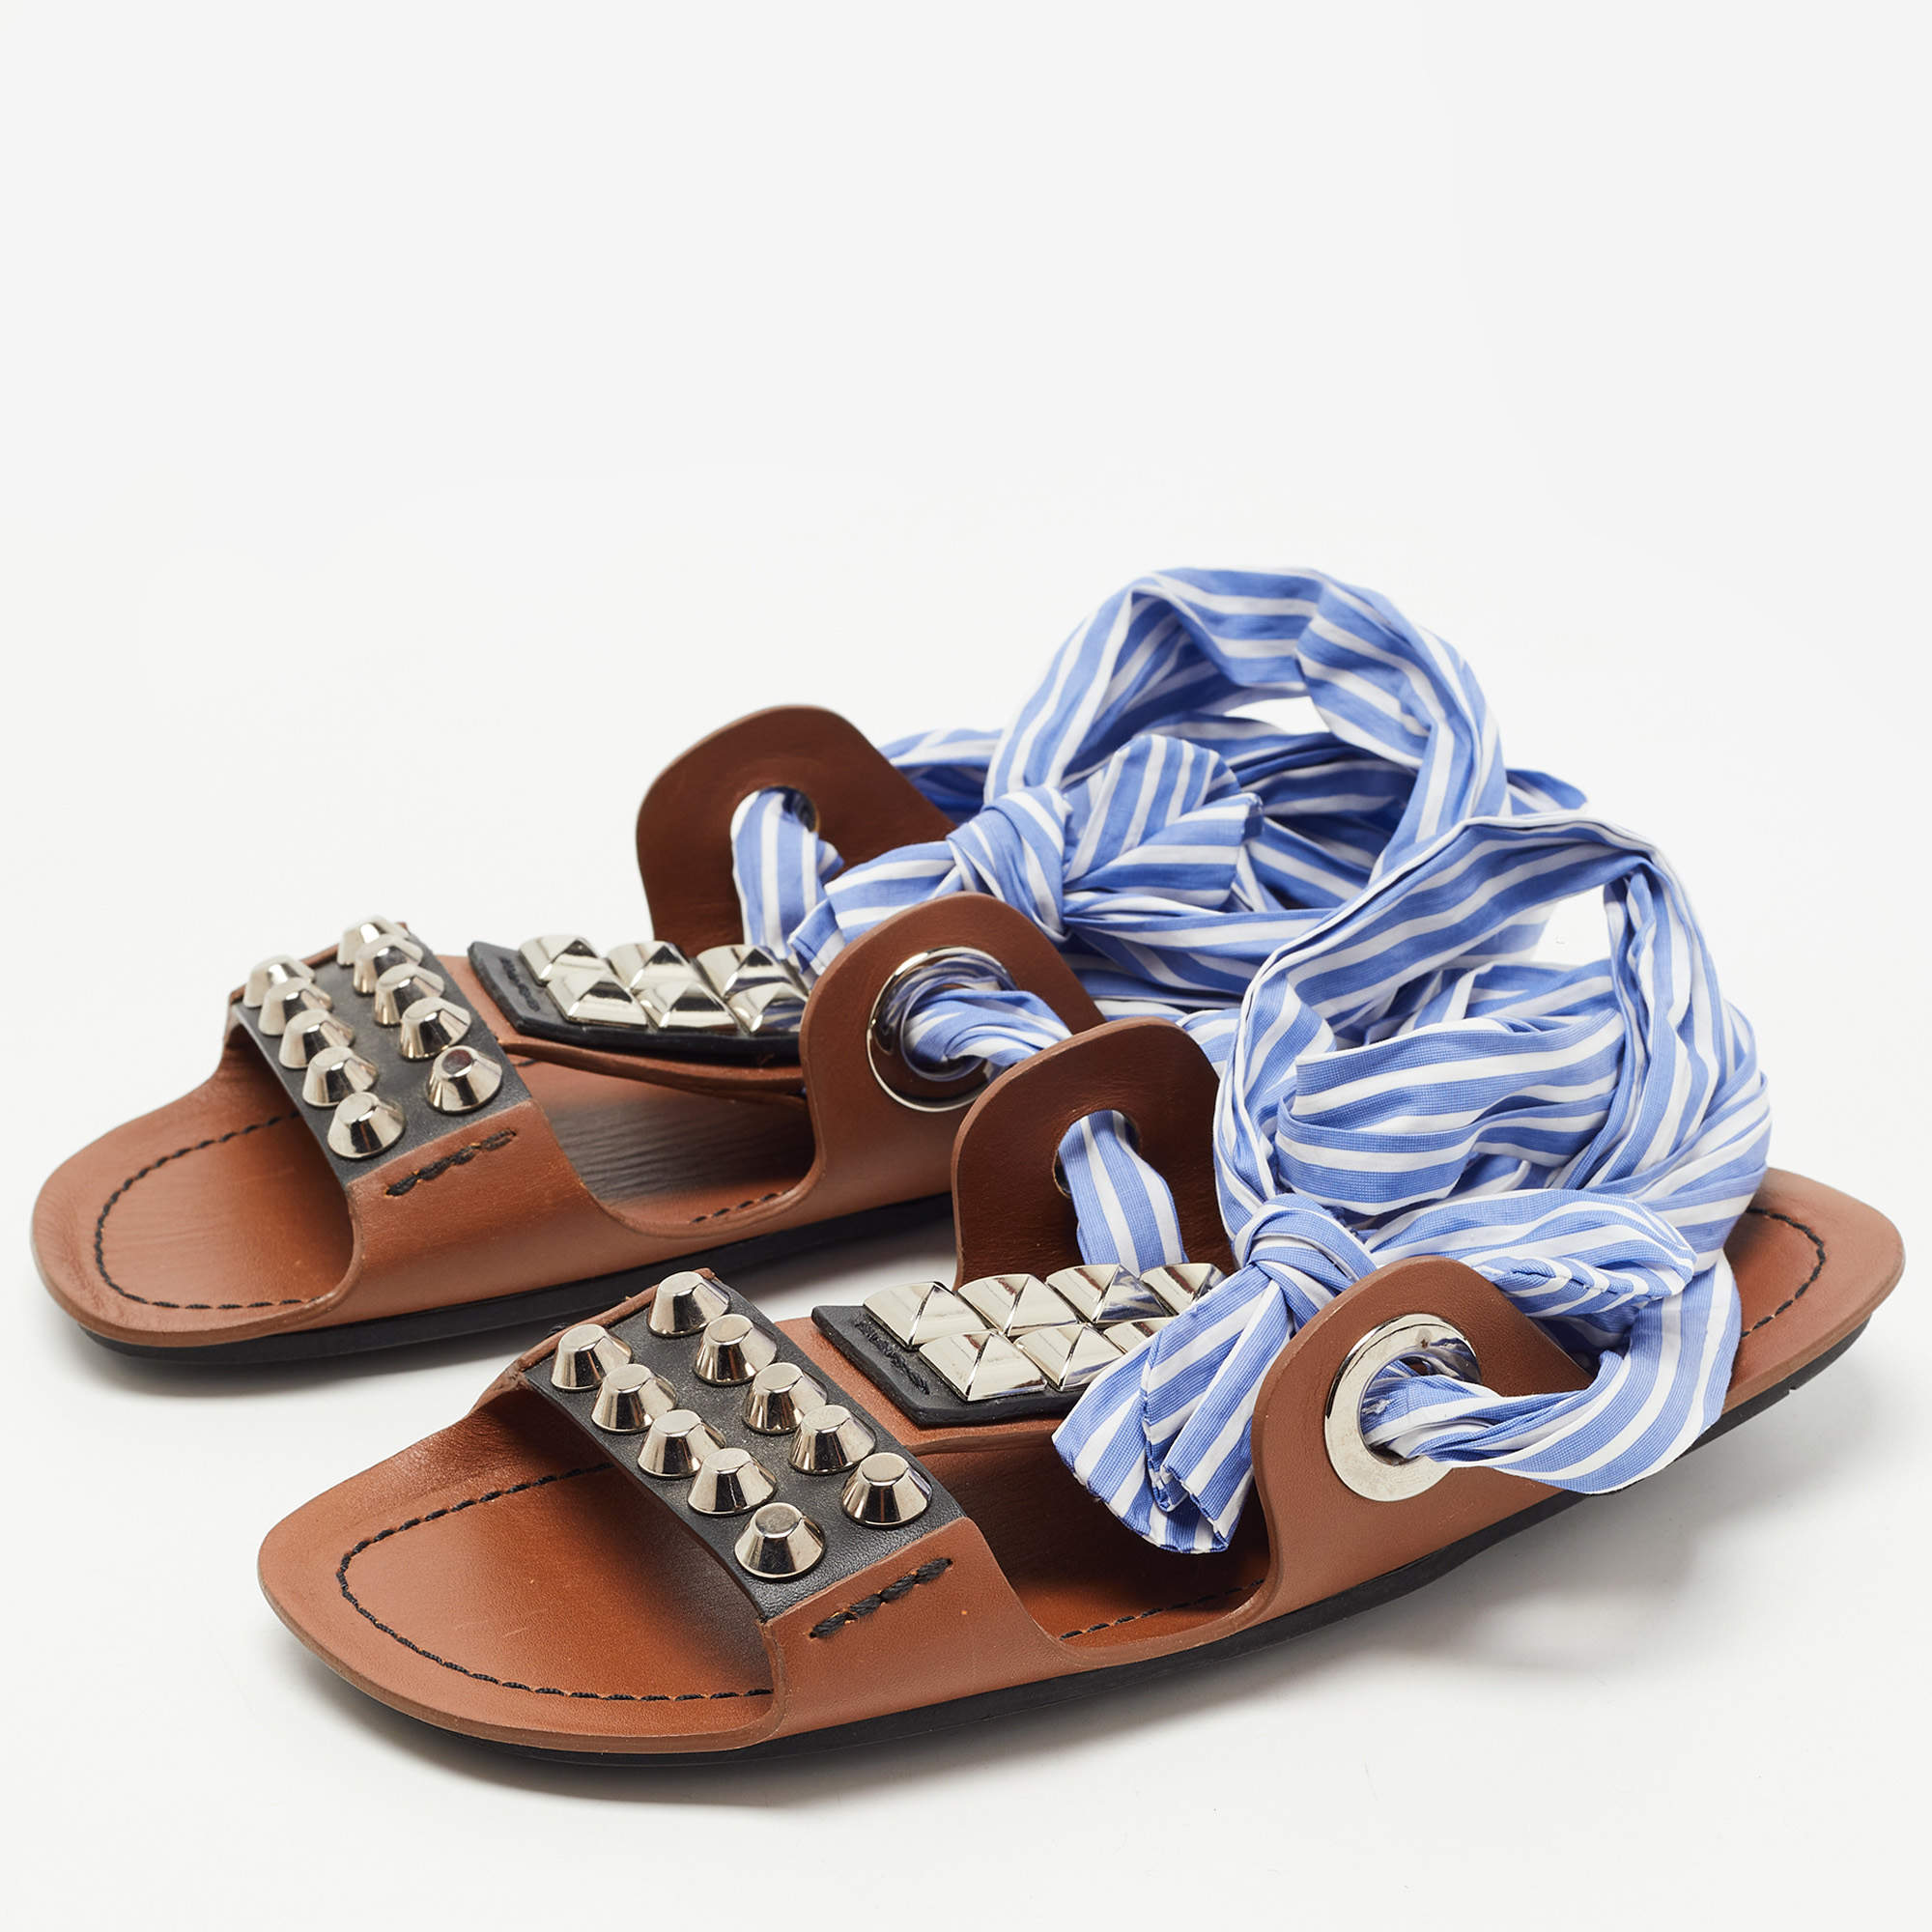 Prada Brown/Blue Leather Studded Ribbon Flat Sandals Size 36 Prada